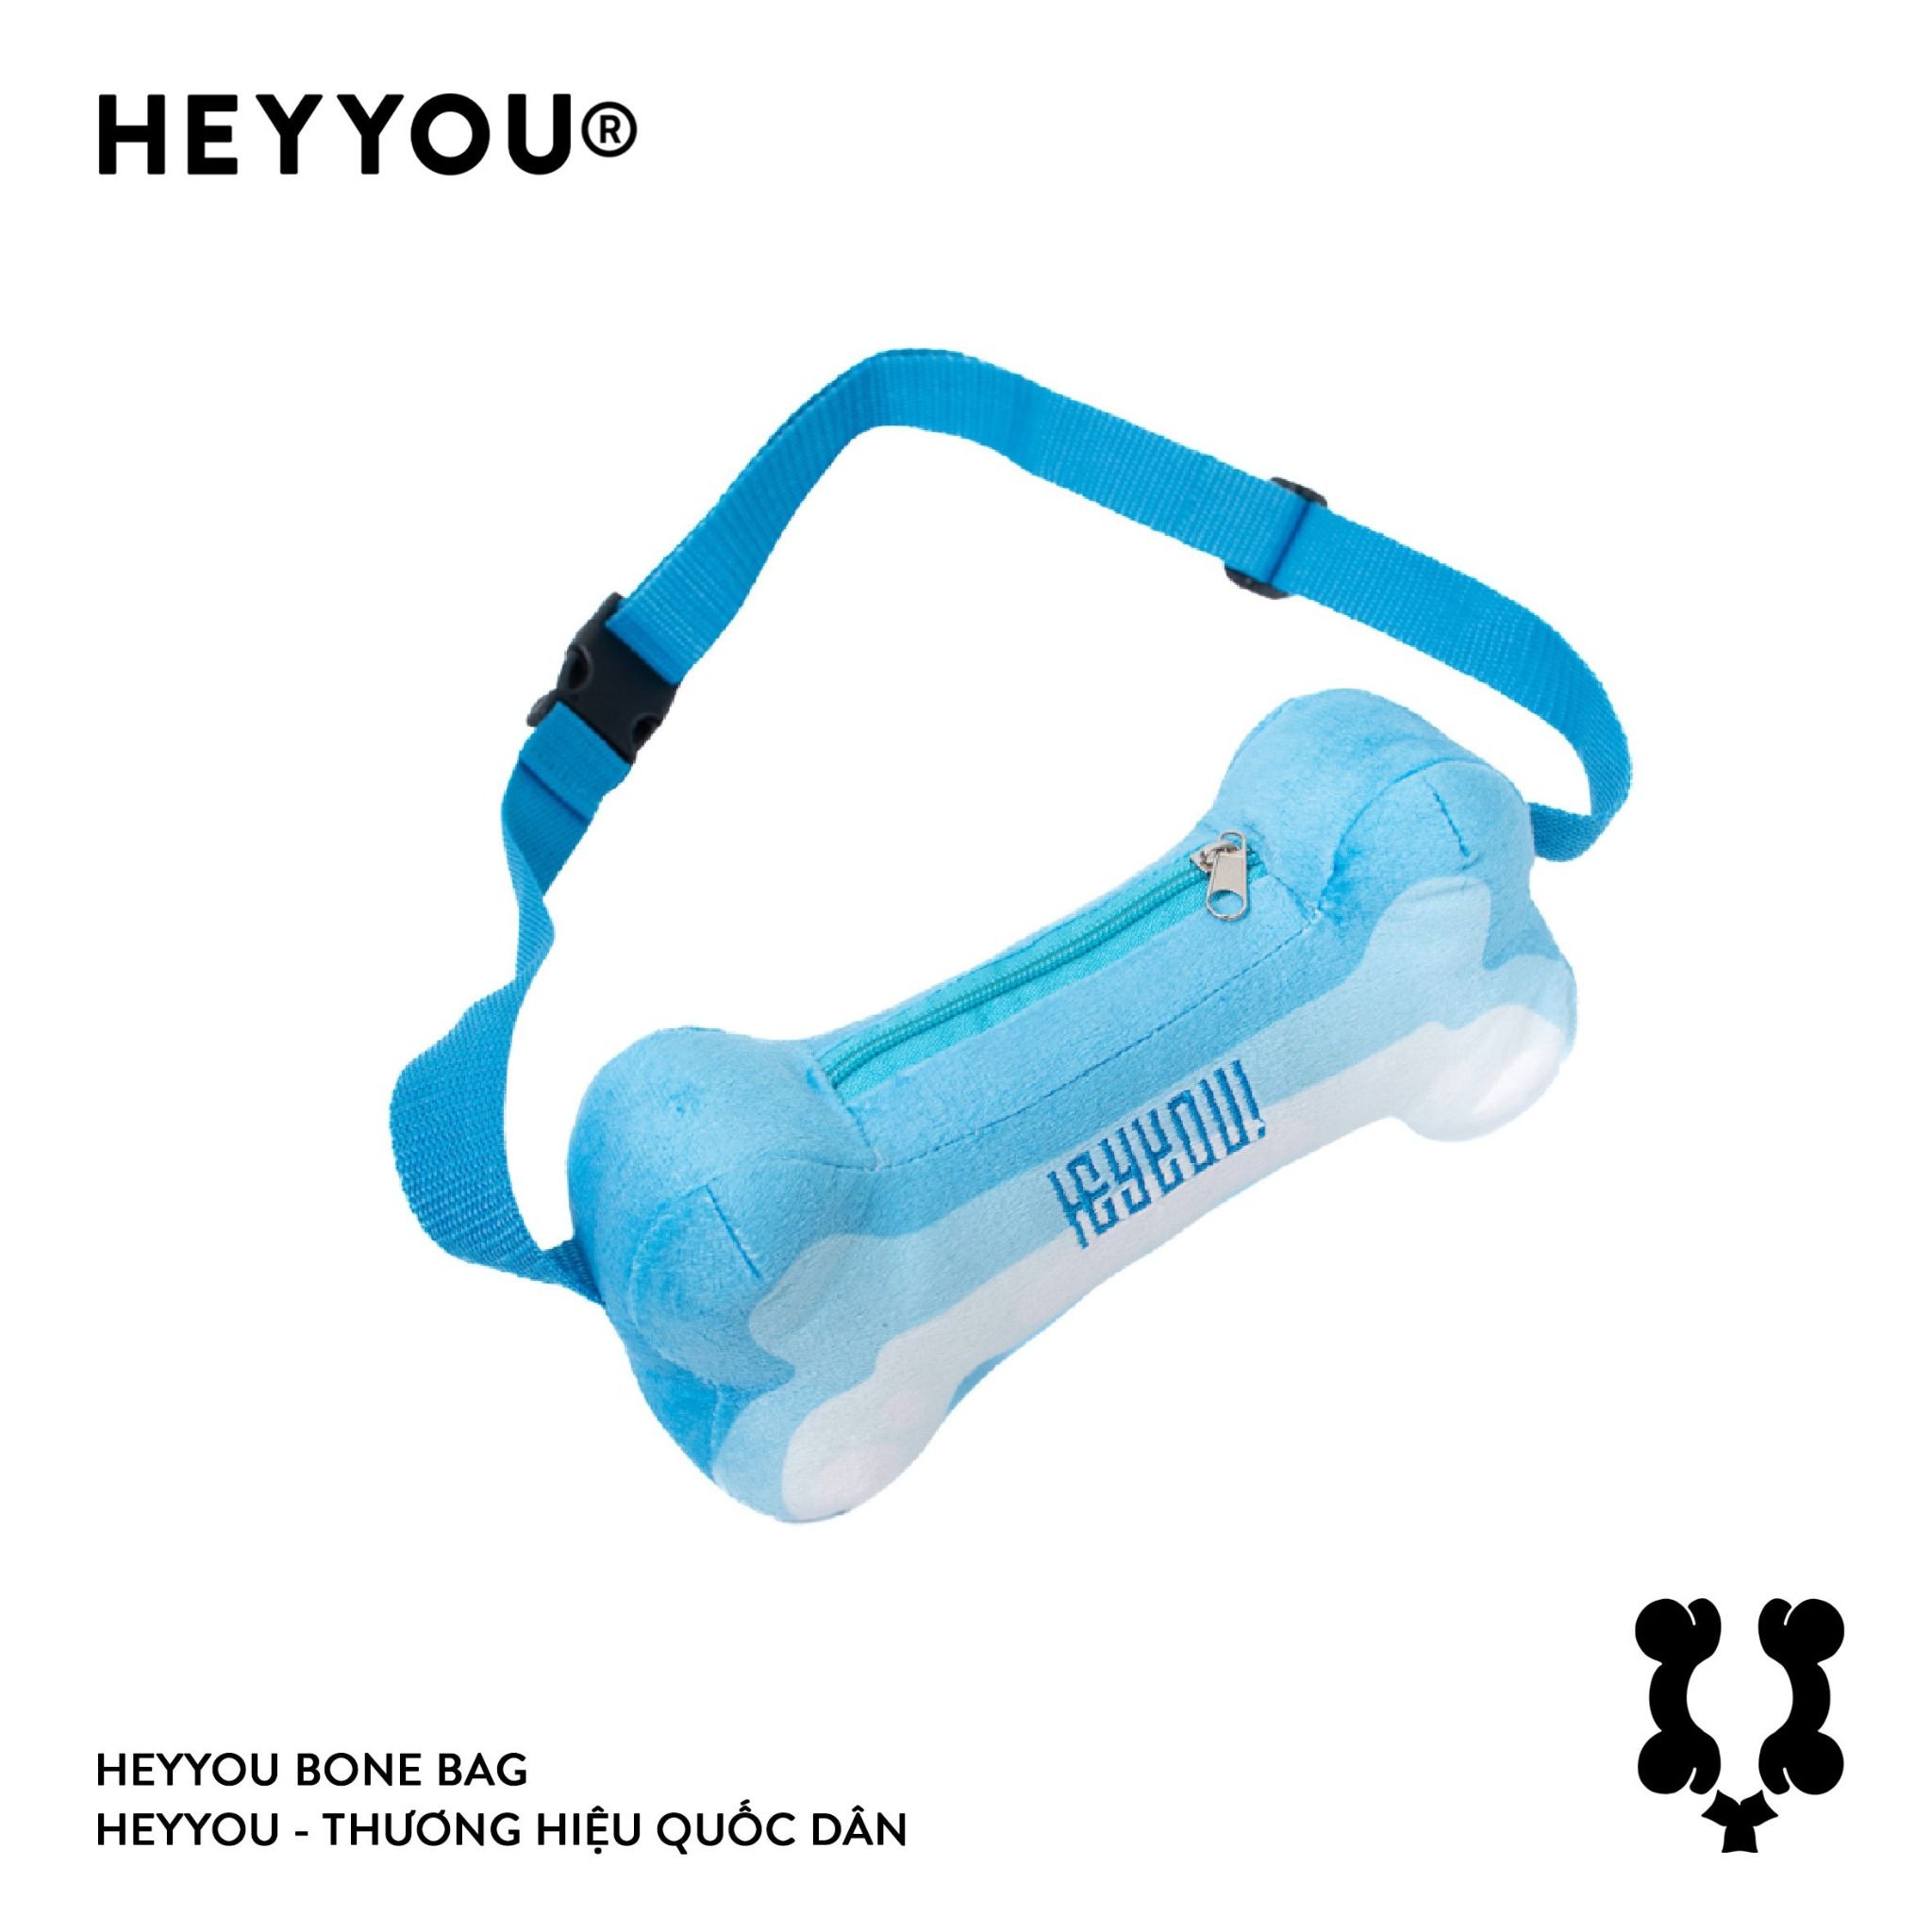  HEYYOU BONE BAG 